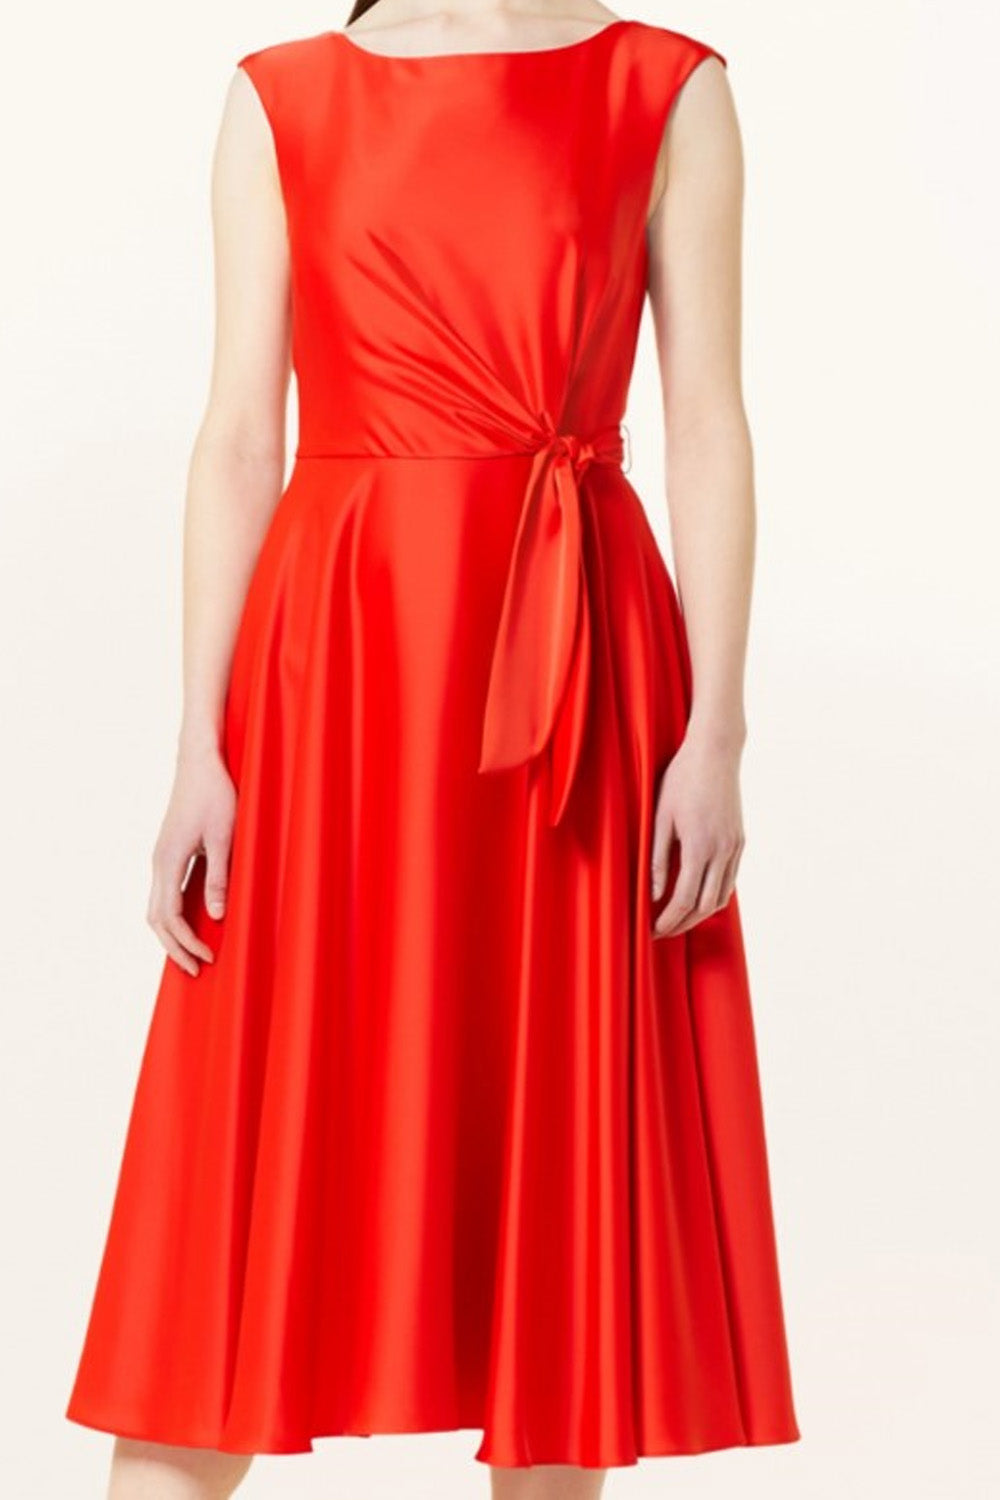 Eden Red Dress